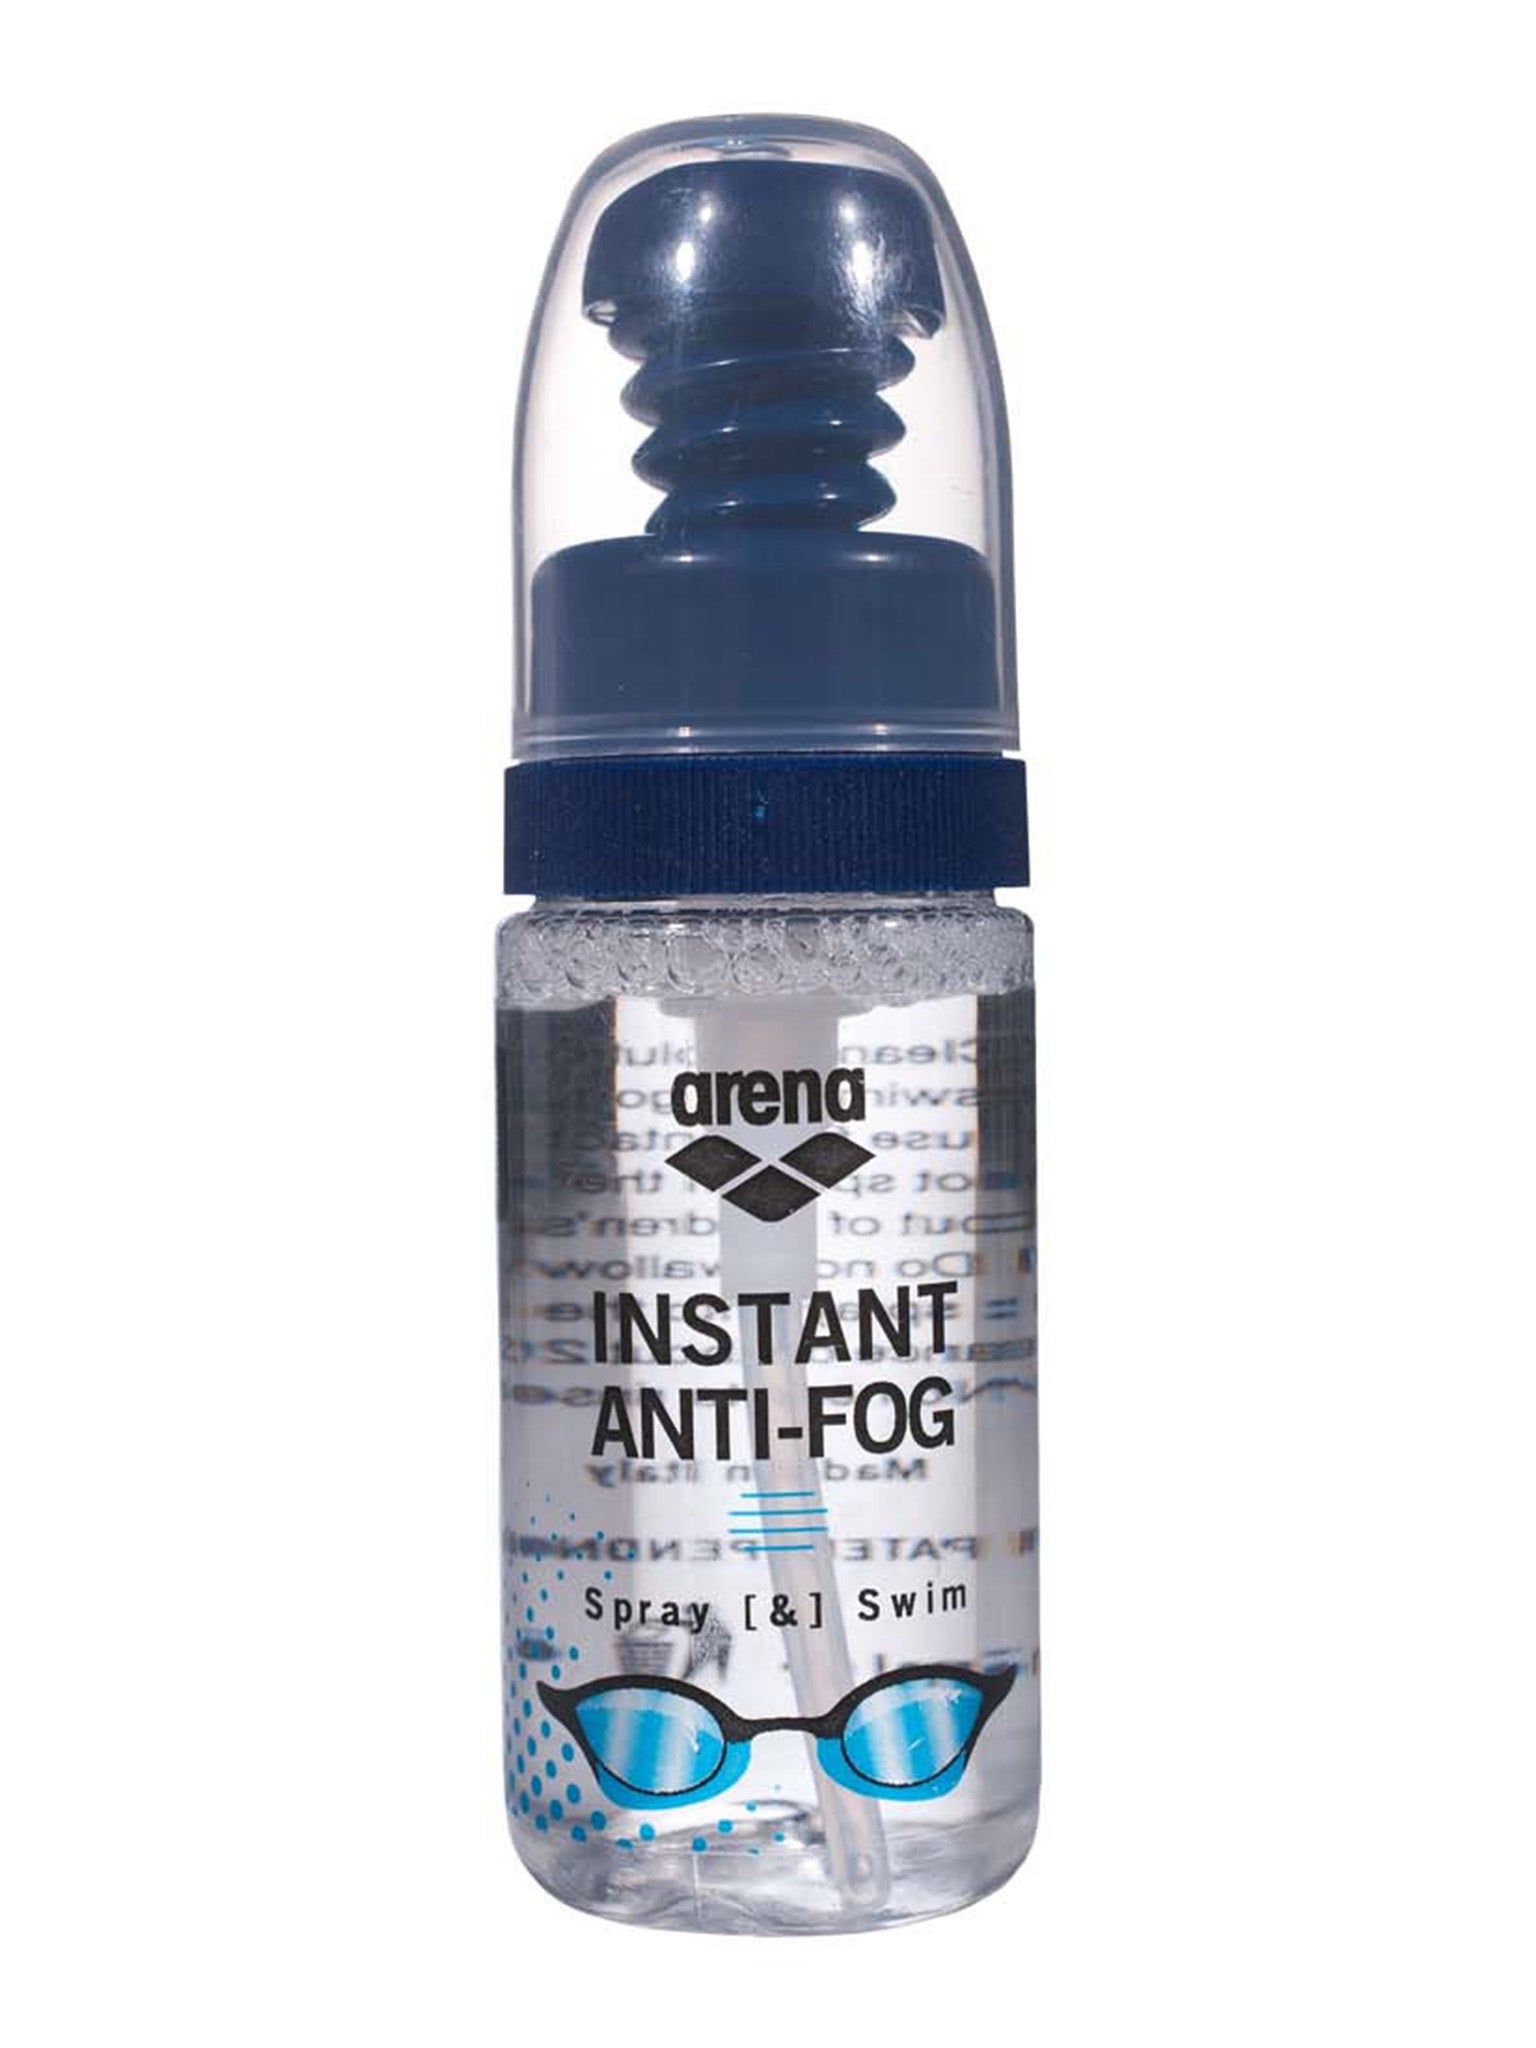 Instant Antifog - Spray And Swim